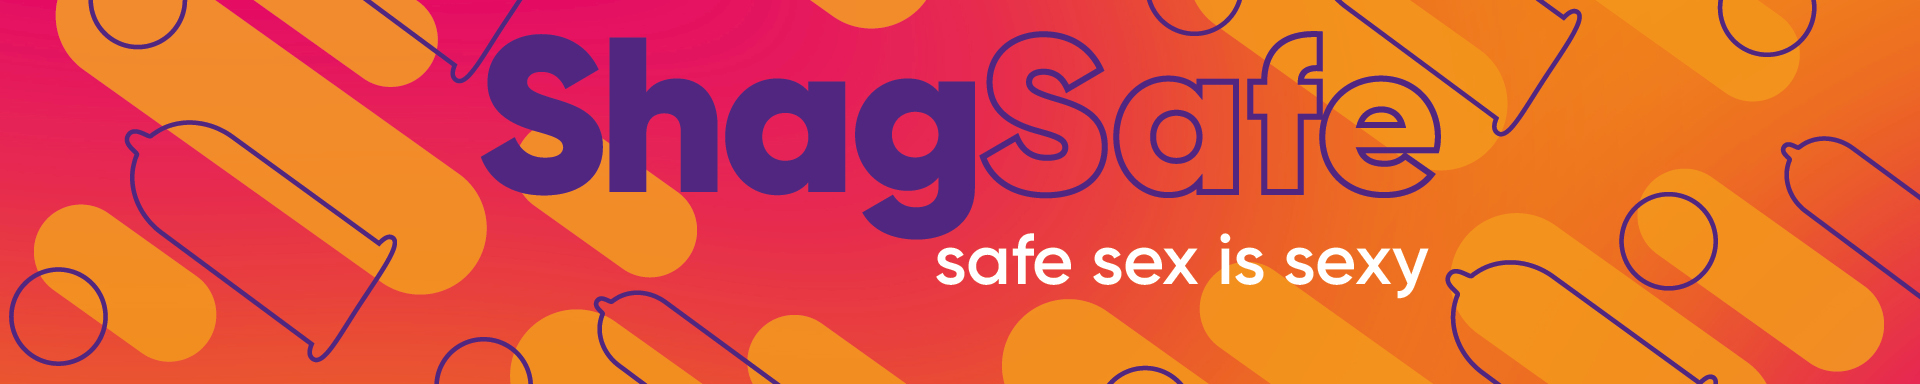 Shag safe - safe sex is sexy